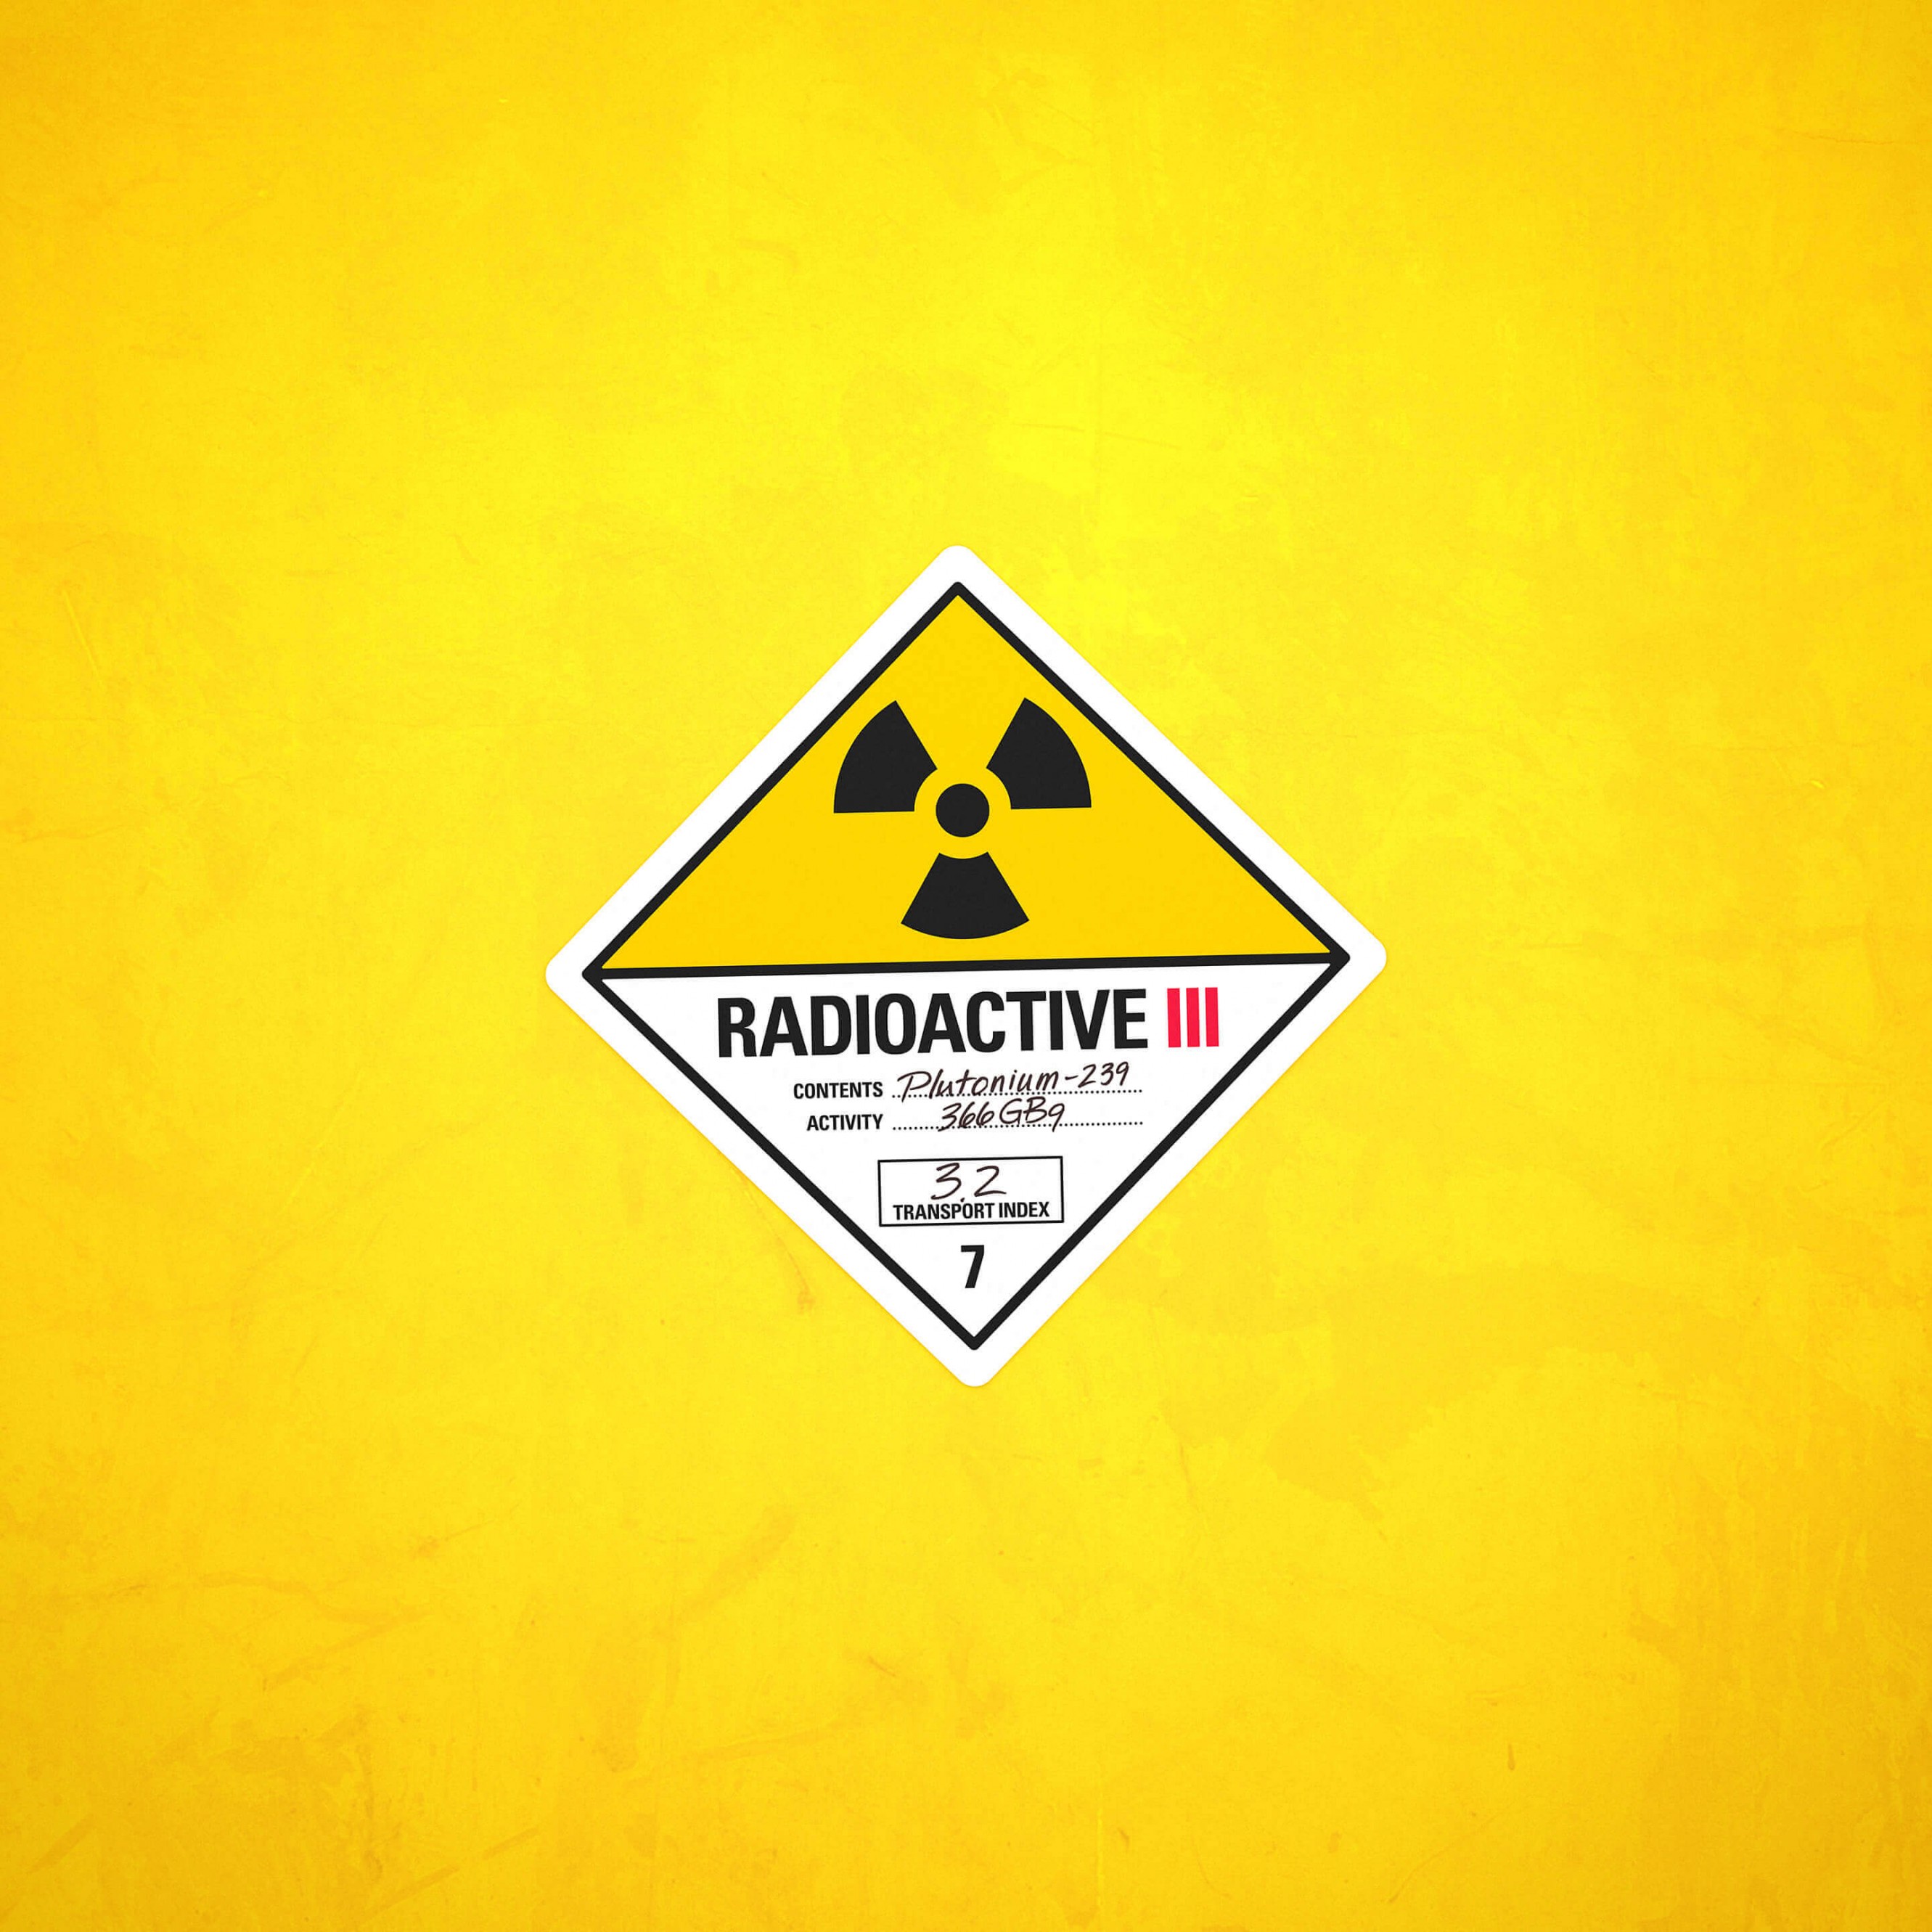 Download Radioactive HD wallpaper for iPhone 6 Plus - HDwallpapers.net